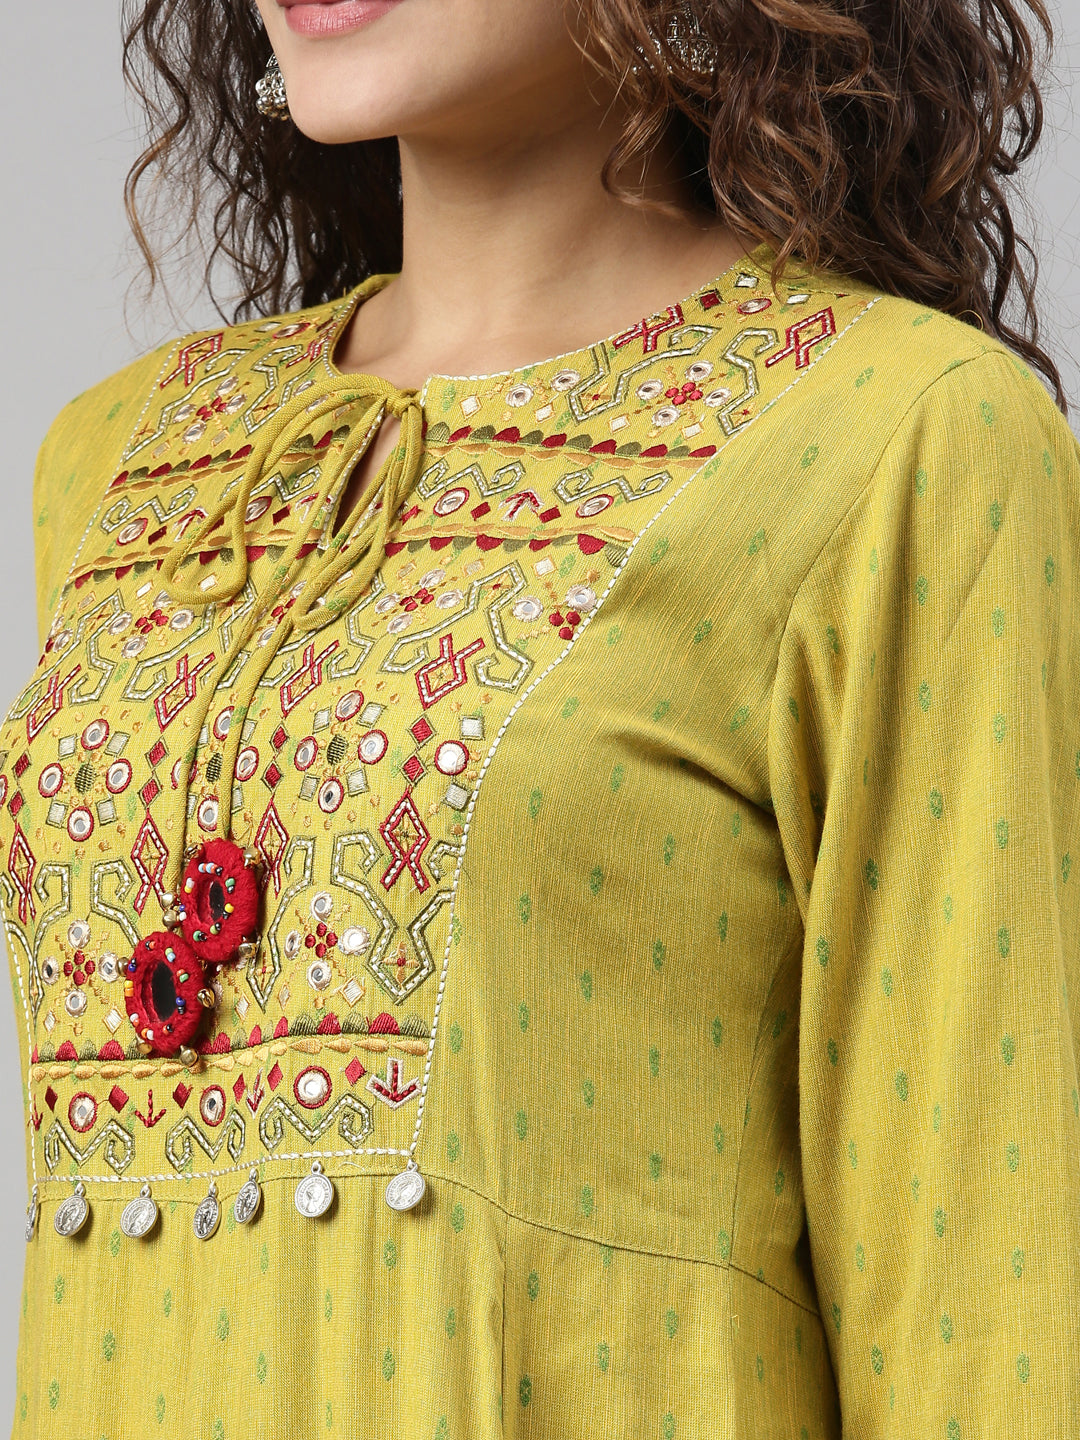 Neeru's Green Color Slub Rayon Fabric Kurta